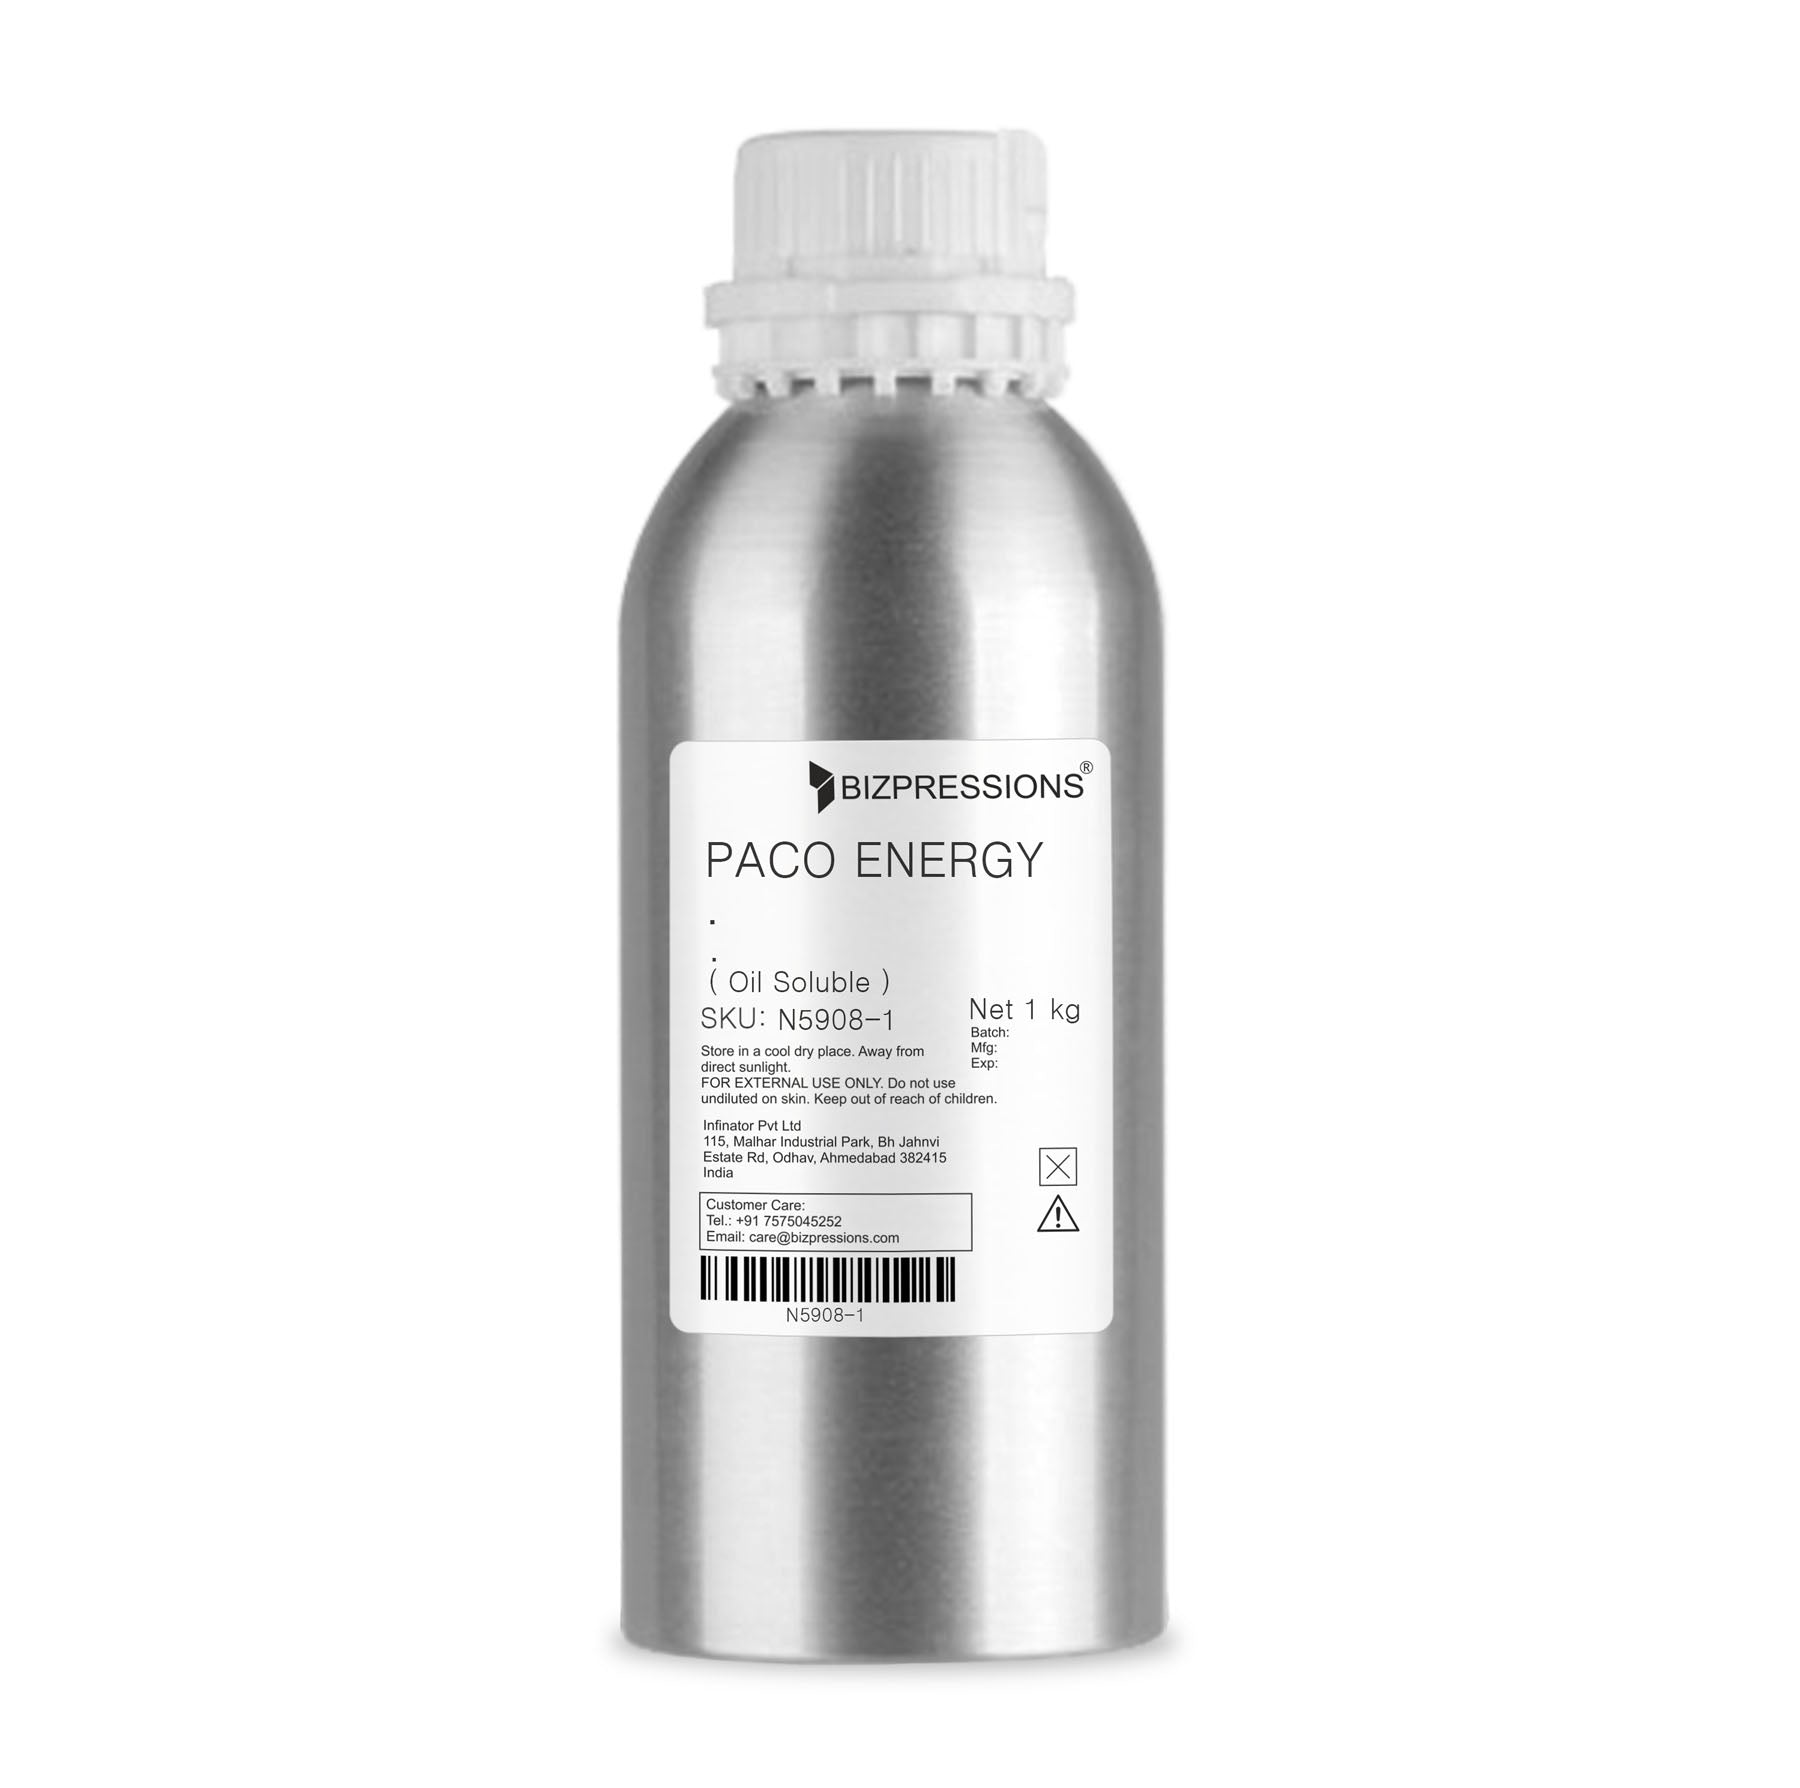 PACO ENERGY - Fragrance ( Oil Soluble ) - 1 kg